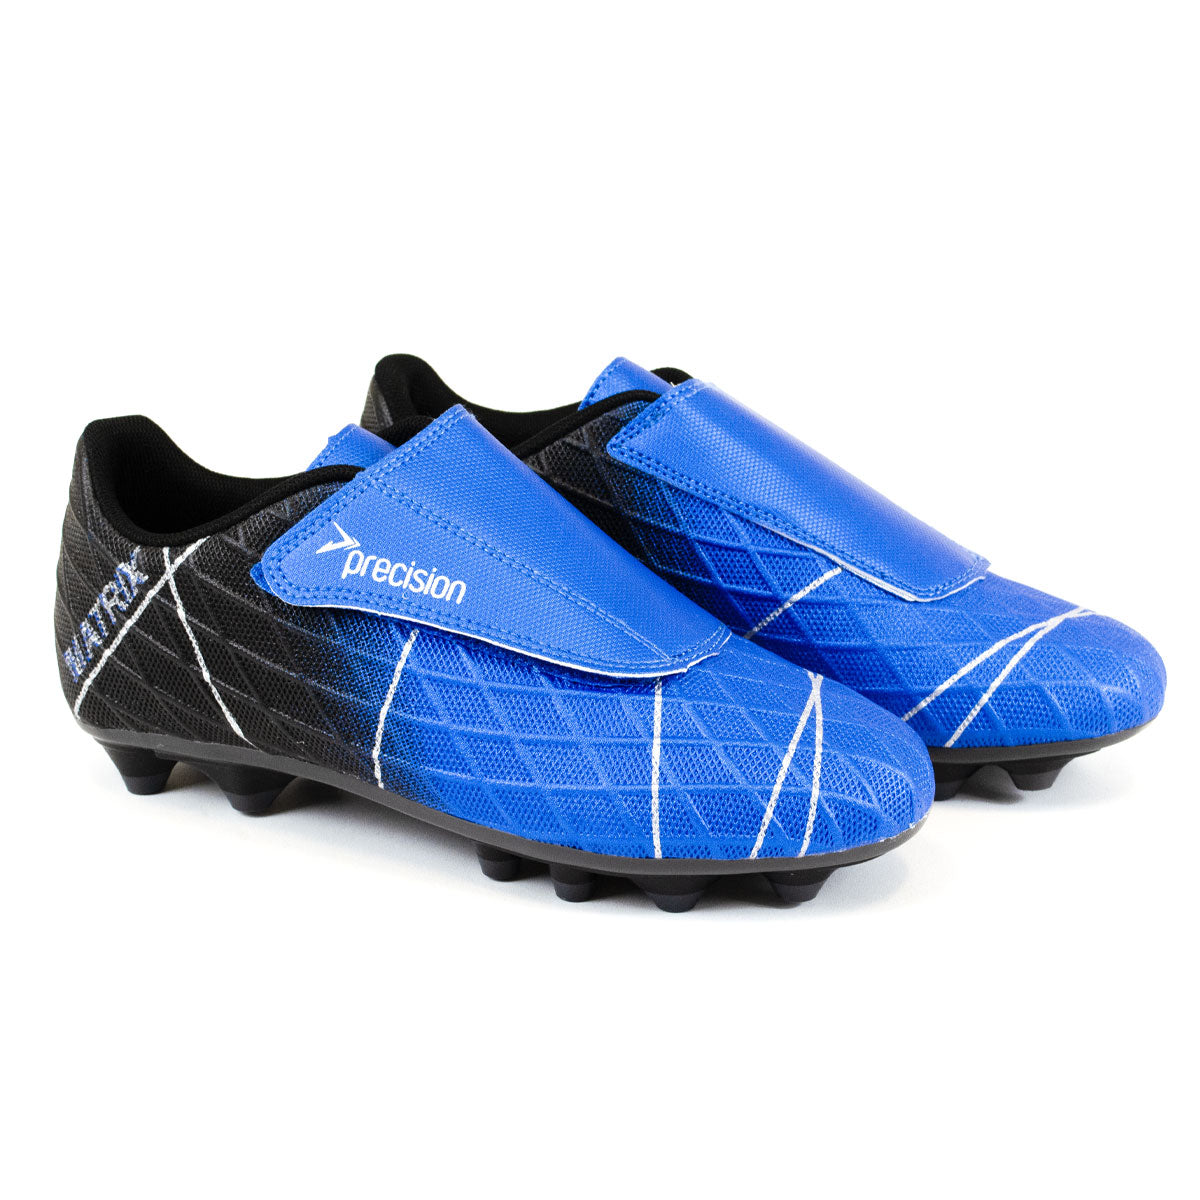 Precision Training Matrix FG Football Boots - Youth - Blue/Black